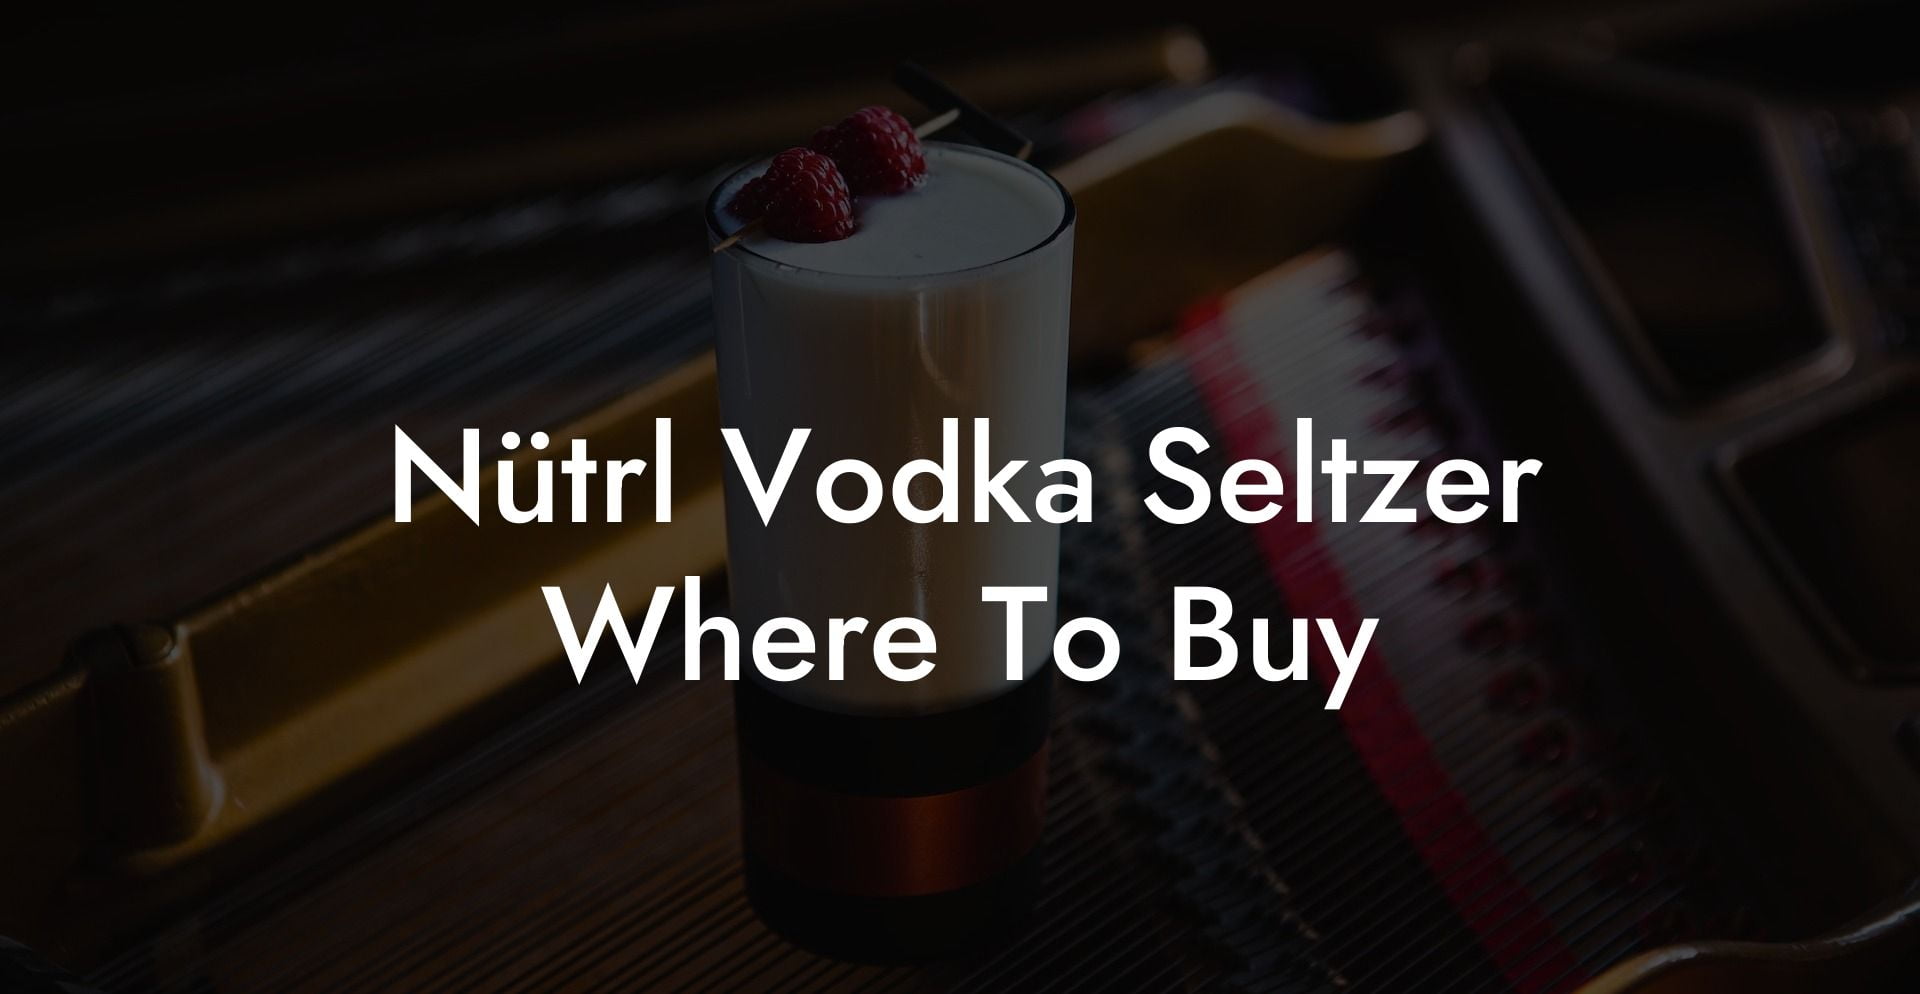 Nütrl Vodka Seltzer Where To Buy